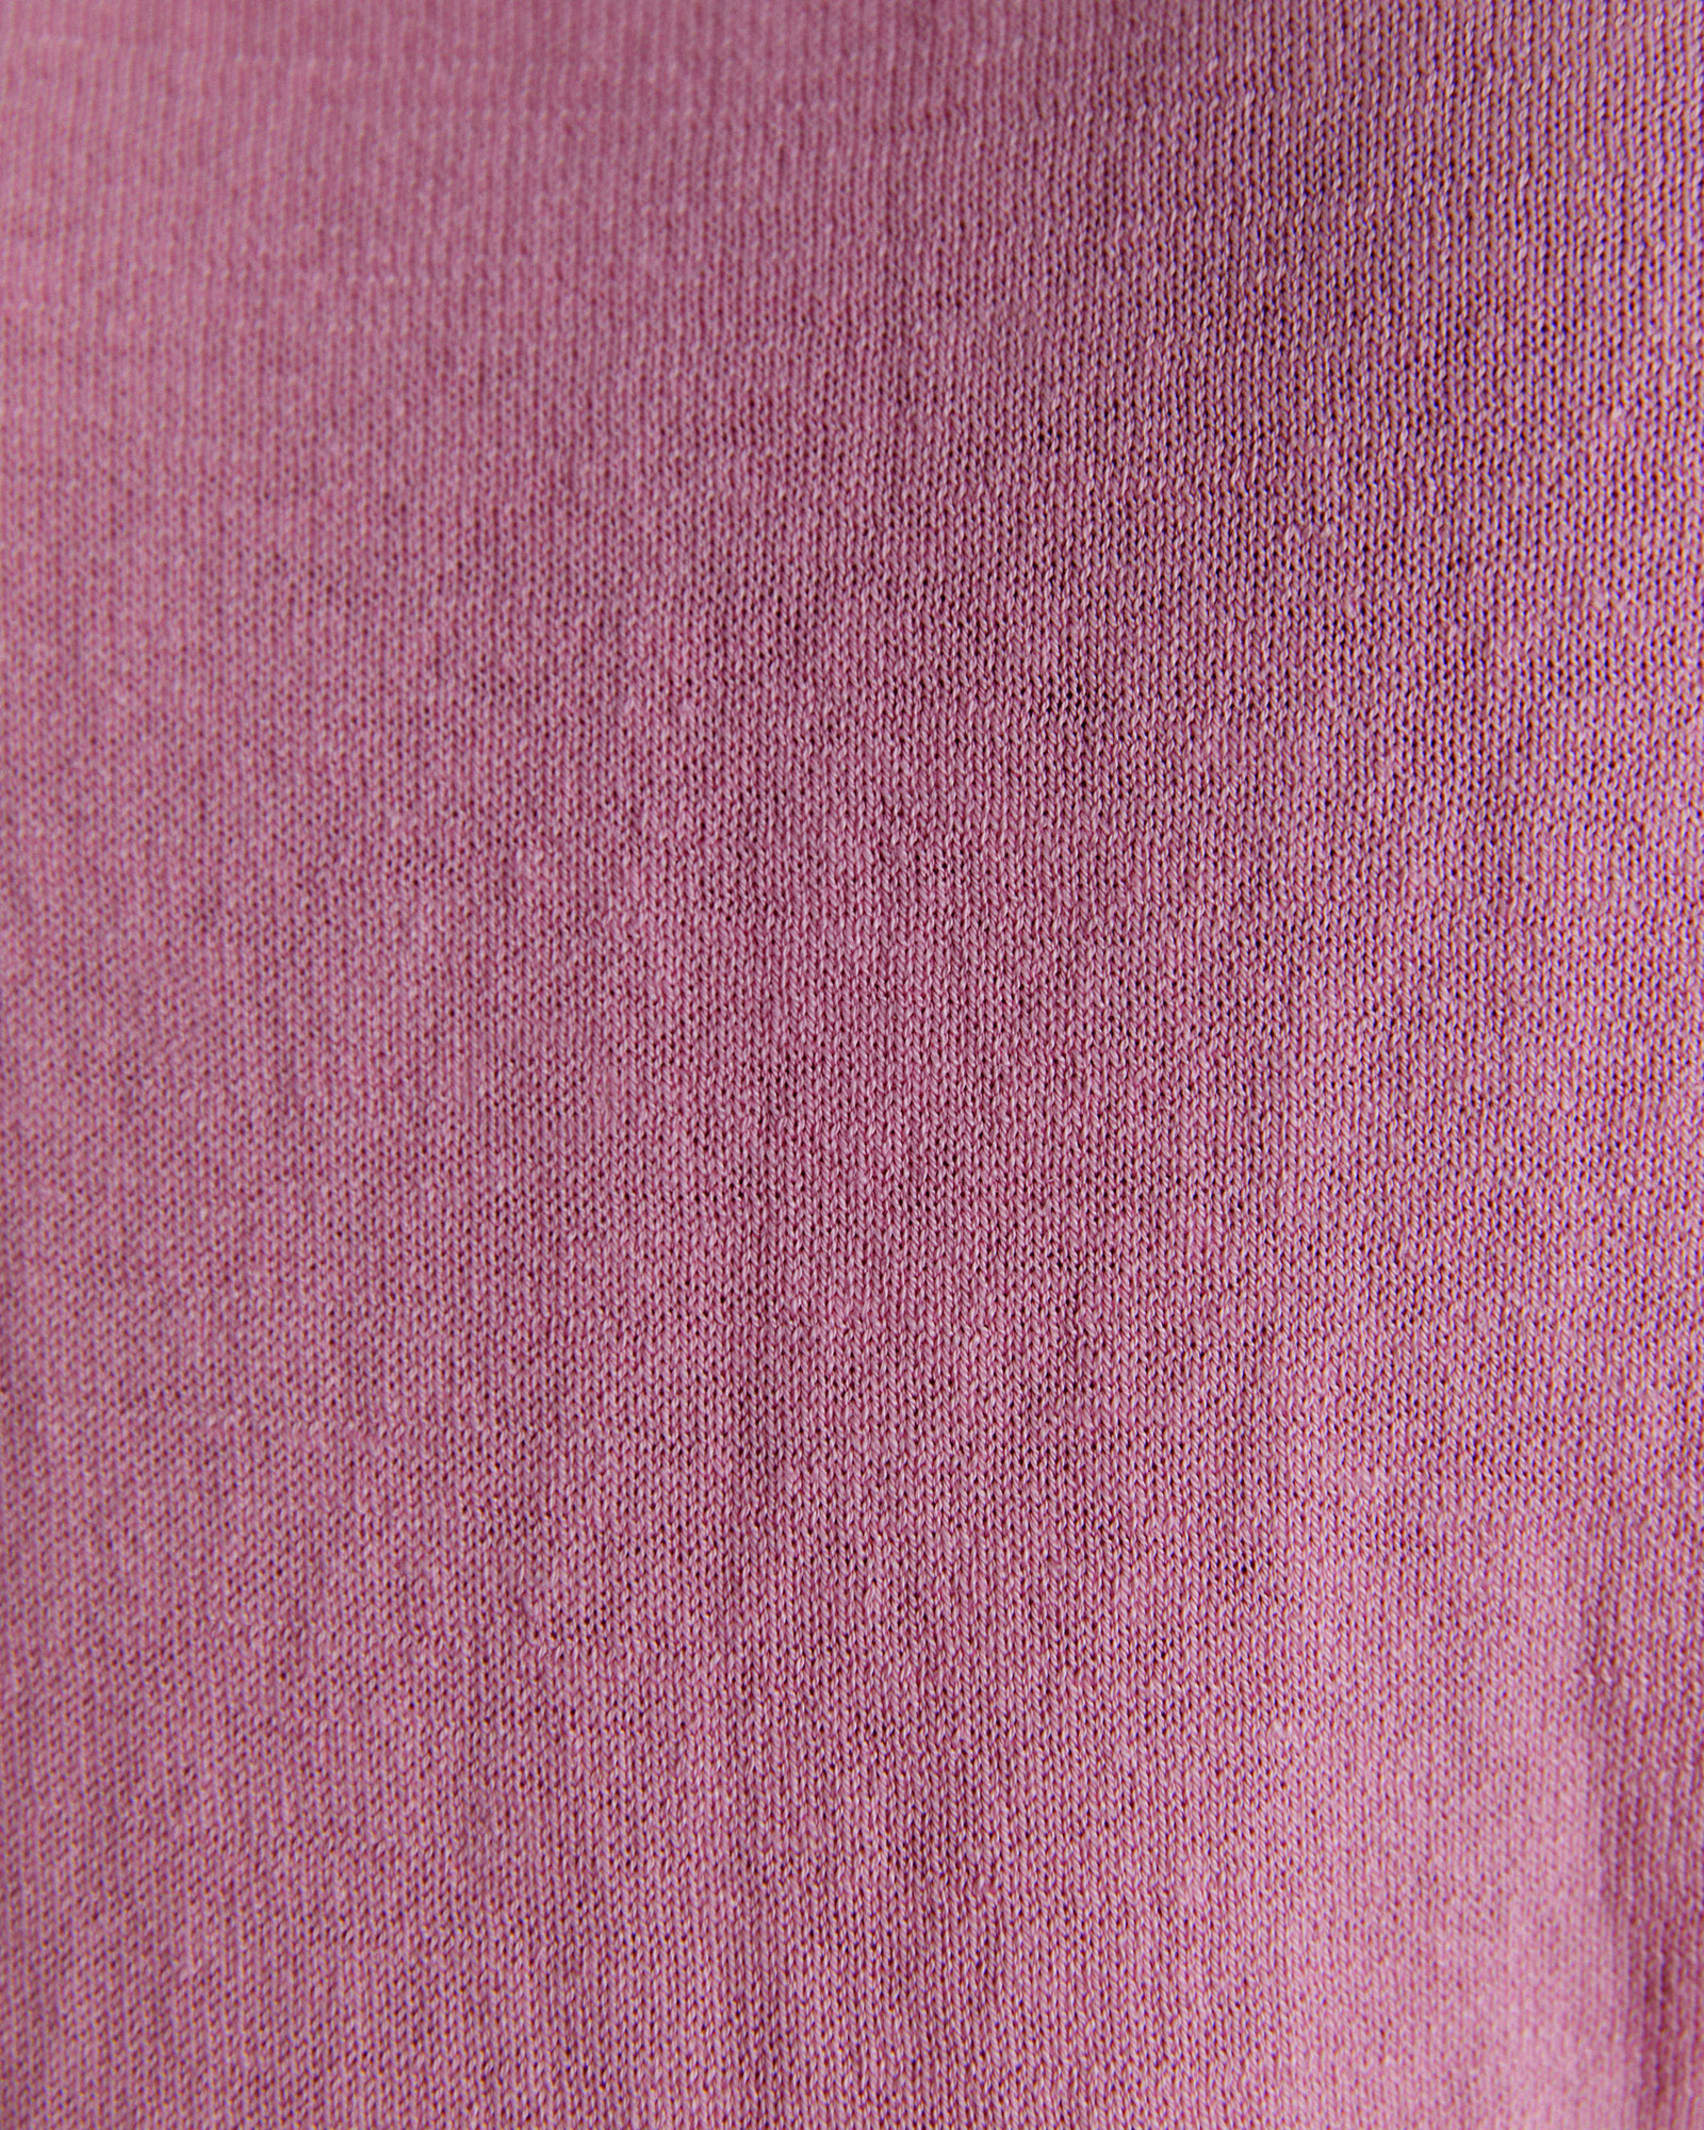 Alphine Silk Blend Knit Top in CANDY